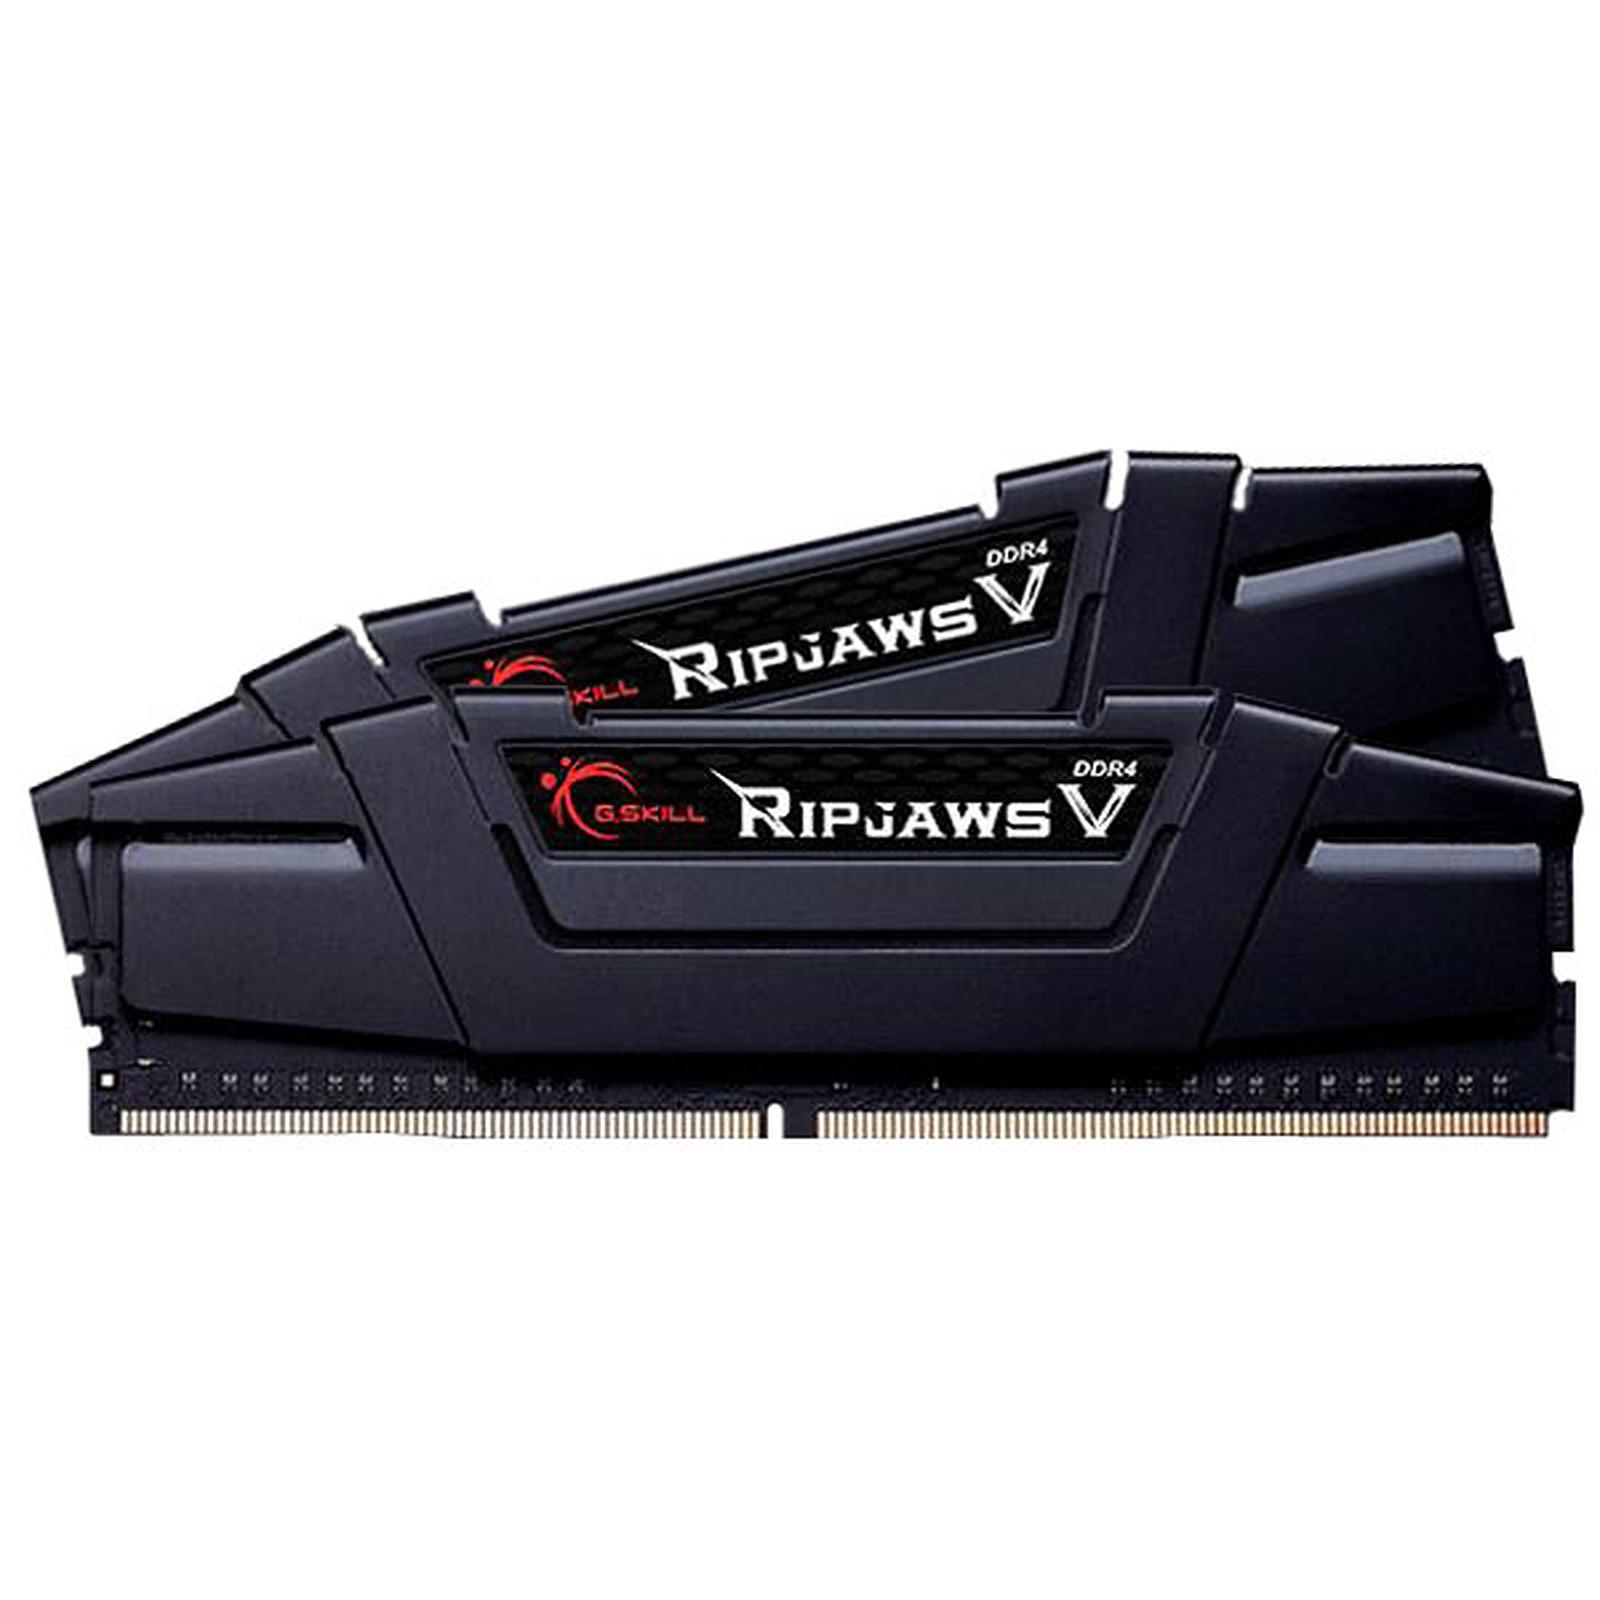 RIPJAWS V SERIES 16GB*2 DDR4 3200MHZ